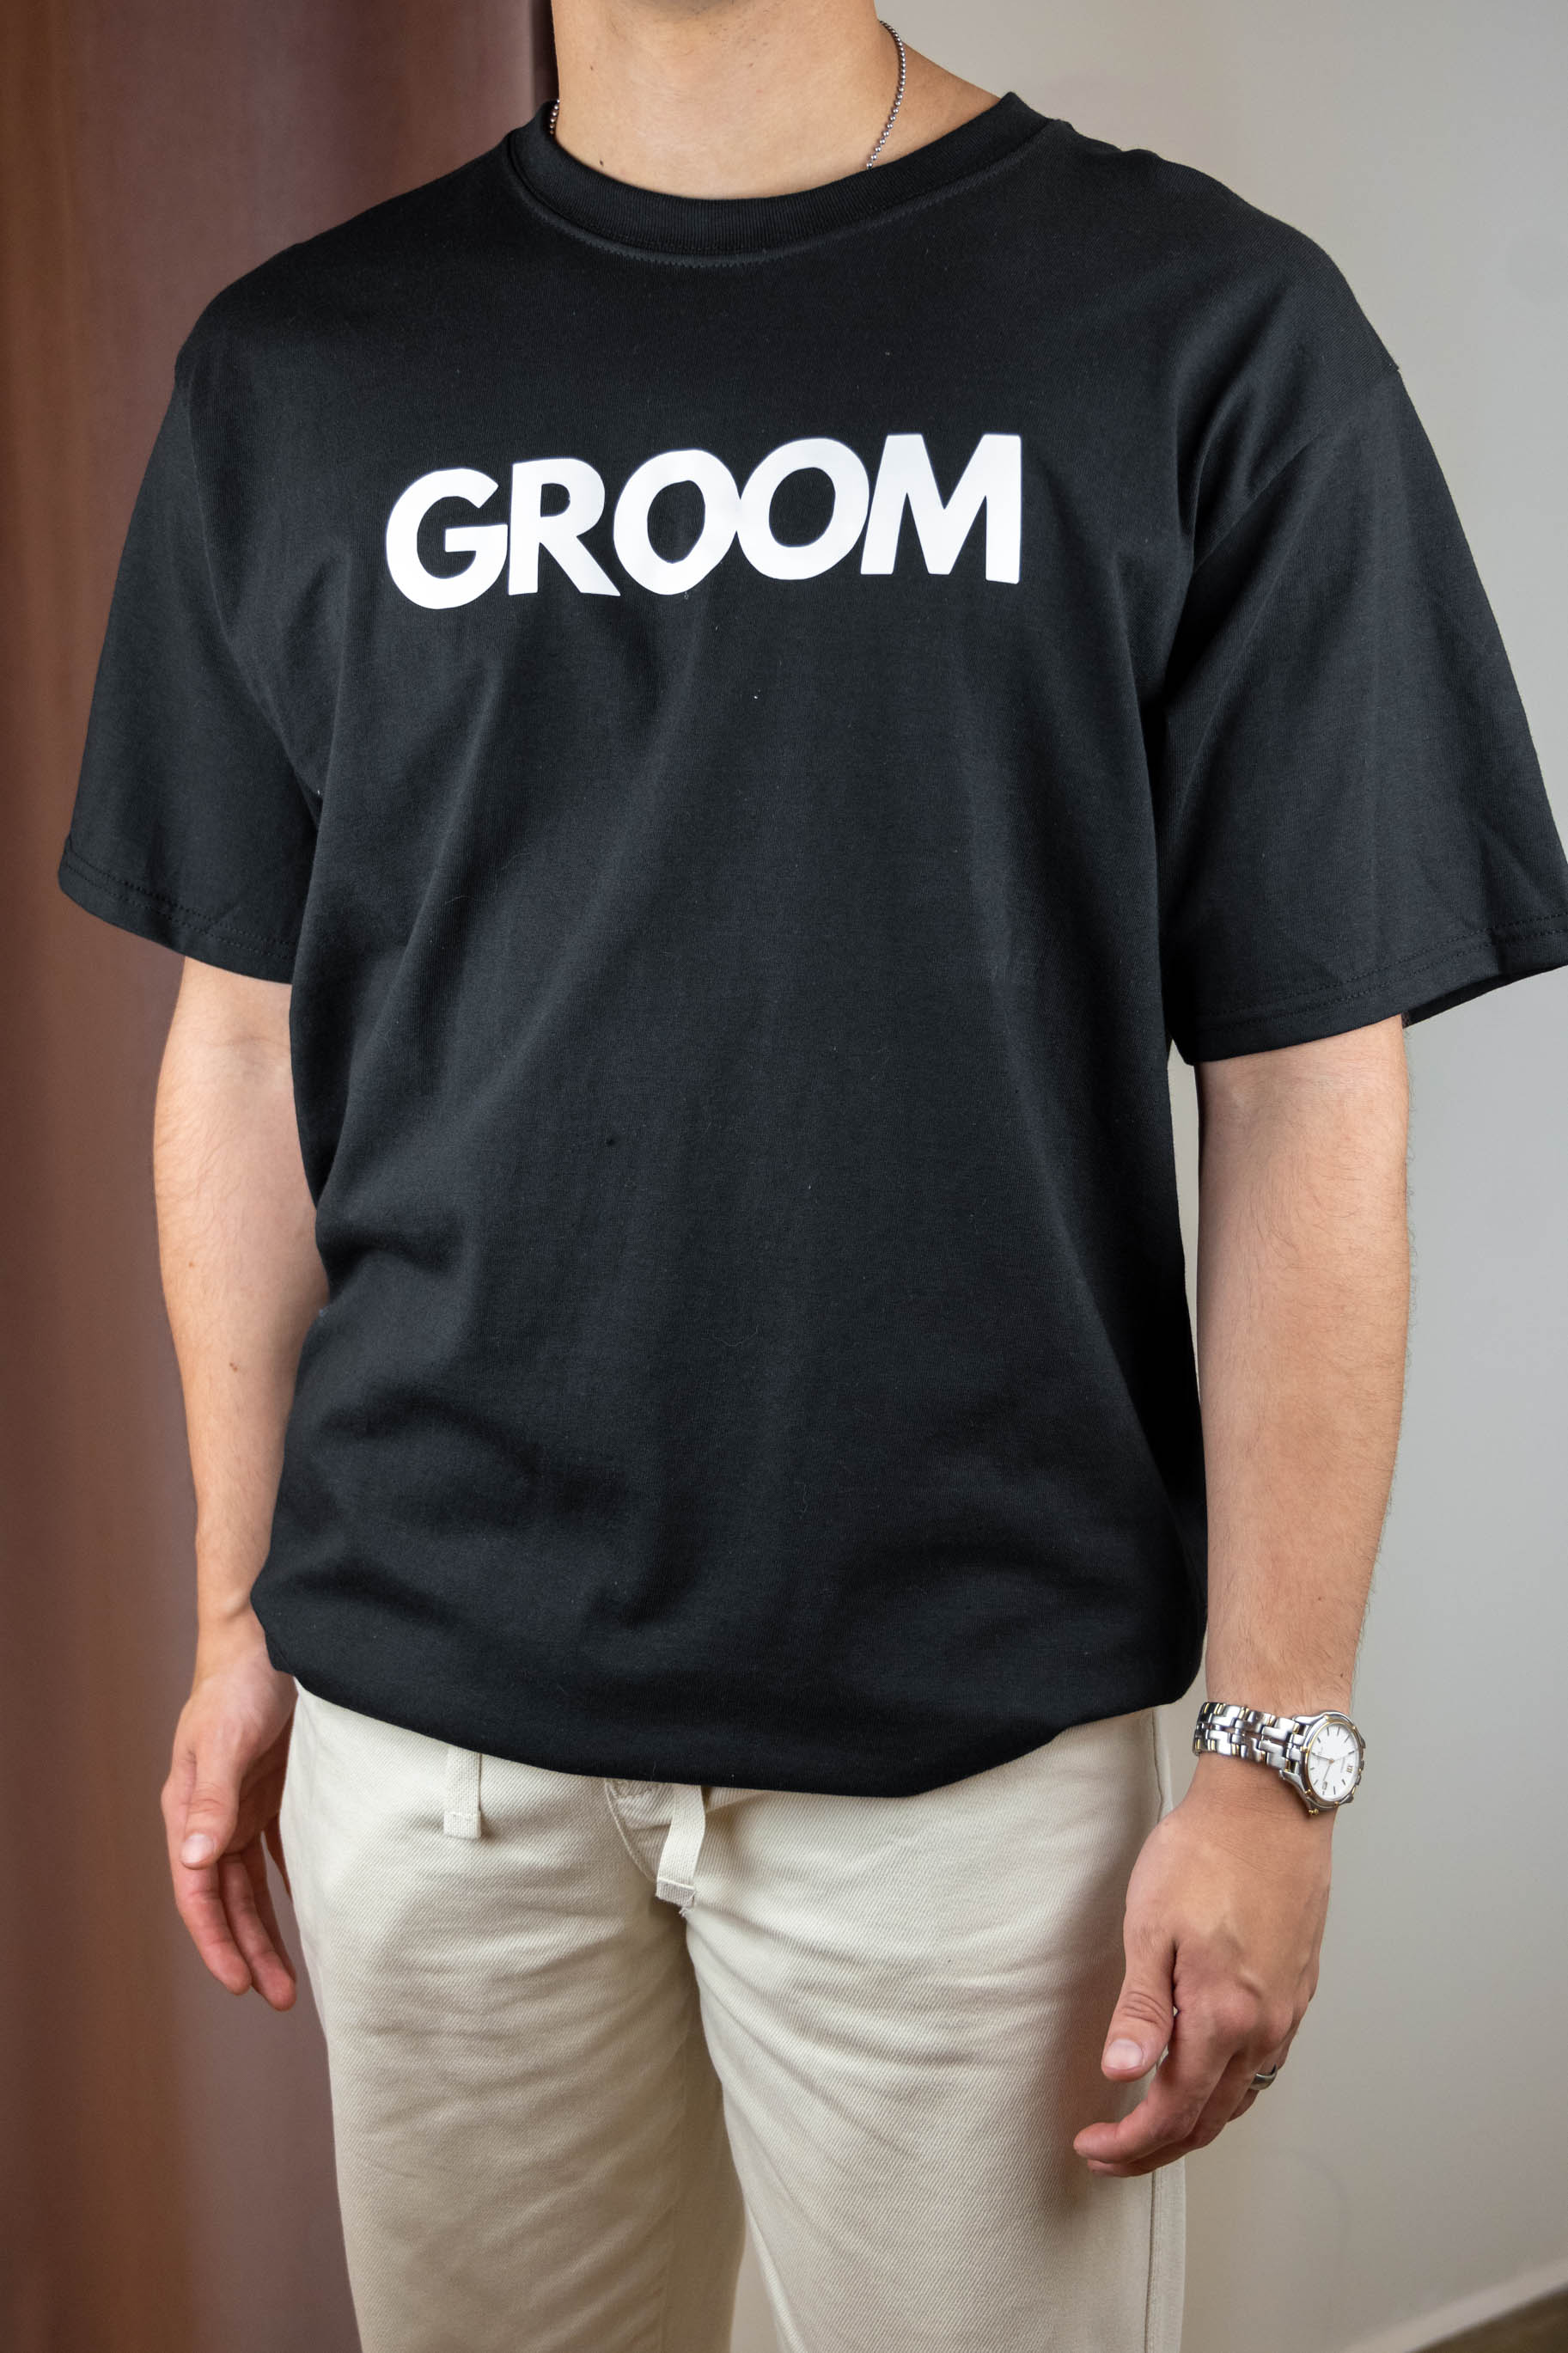 Camiseta negra con texto "Groom" en blanco